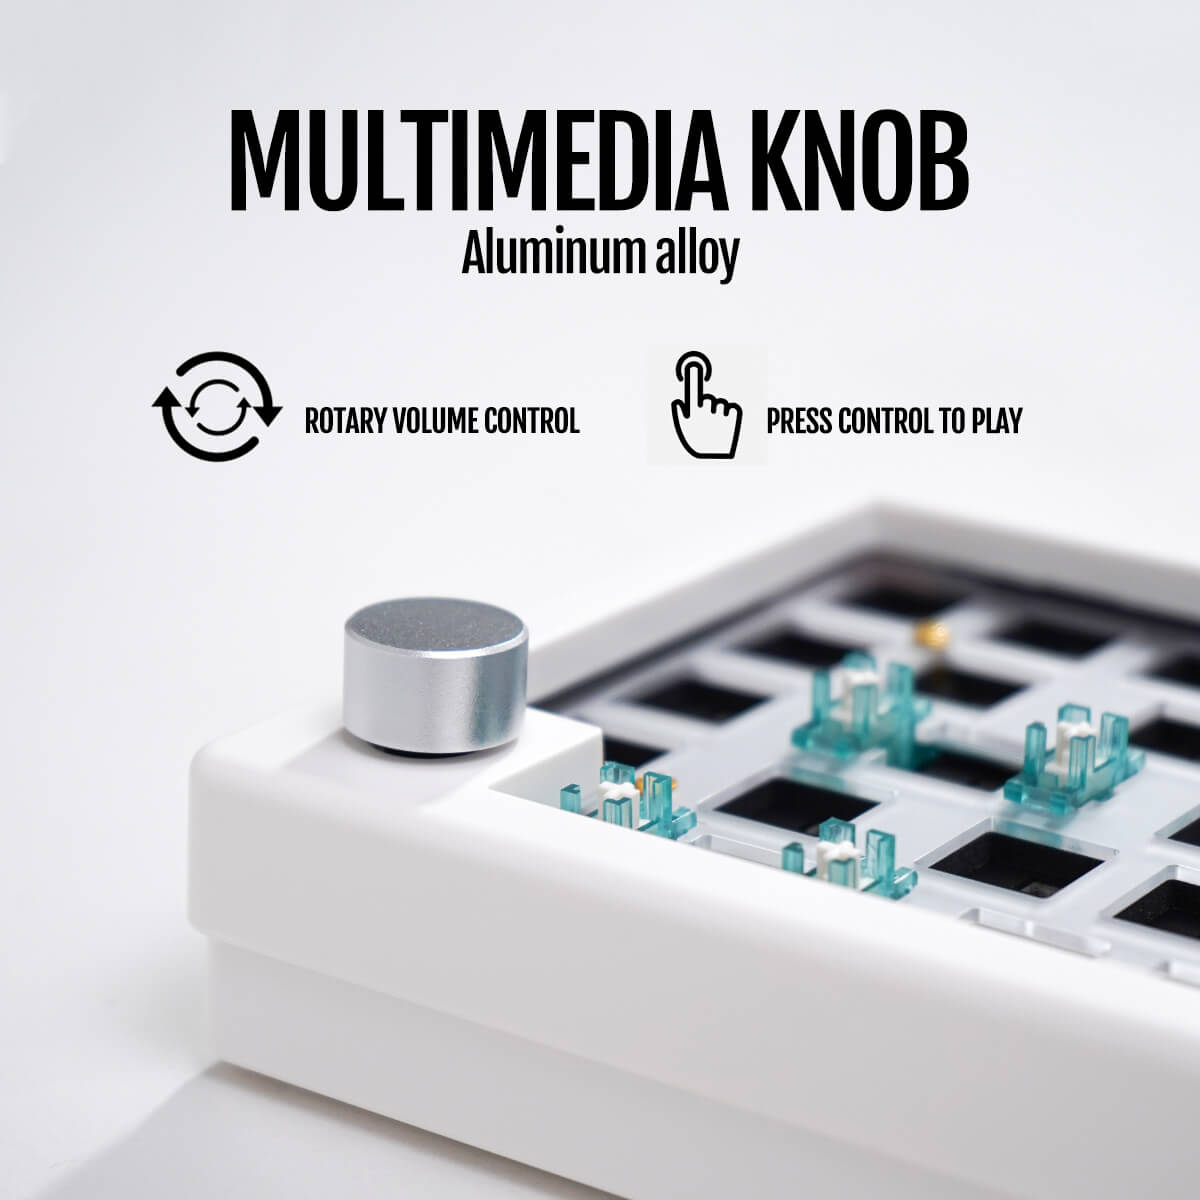 GMK67 Wireless RGB Mechanical Keyboard Kit ( 7 Colors )